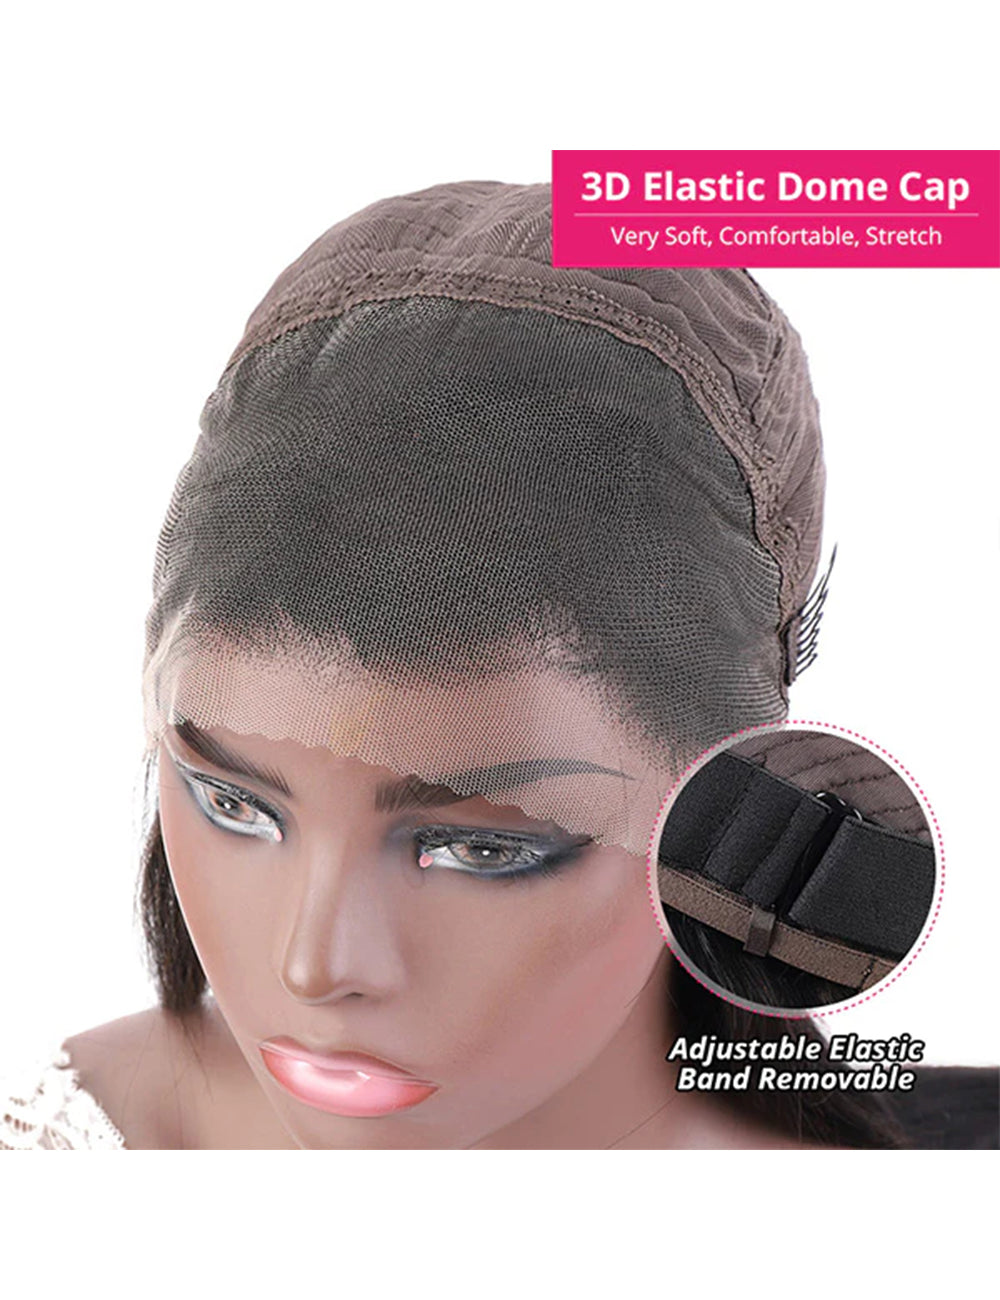 Invisible Knots Wear Go Glueless Wigs Water Wave Wig 13x6 Lace Frontal Wigs Pre Cut Wigs Beginner Friendly